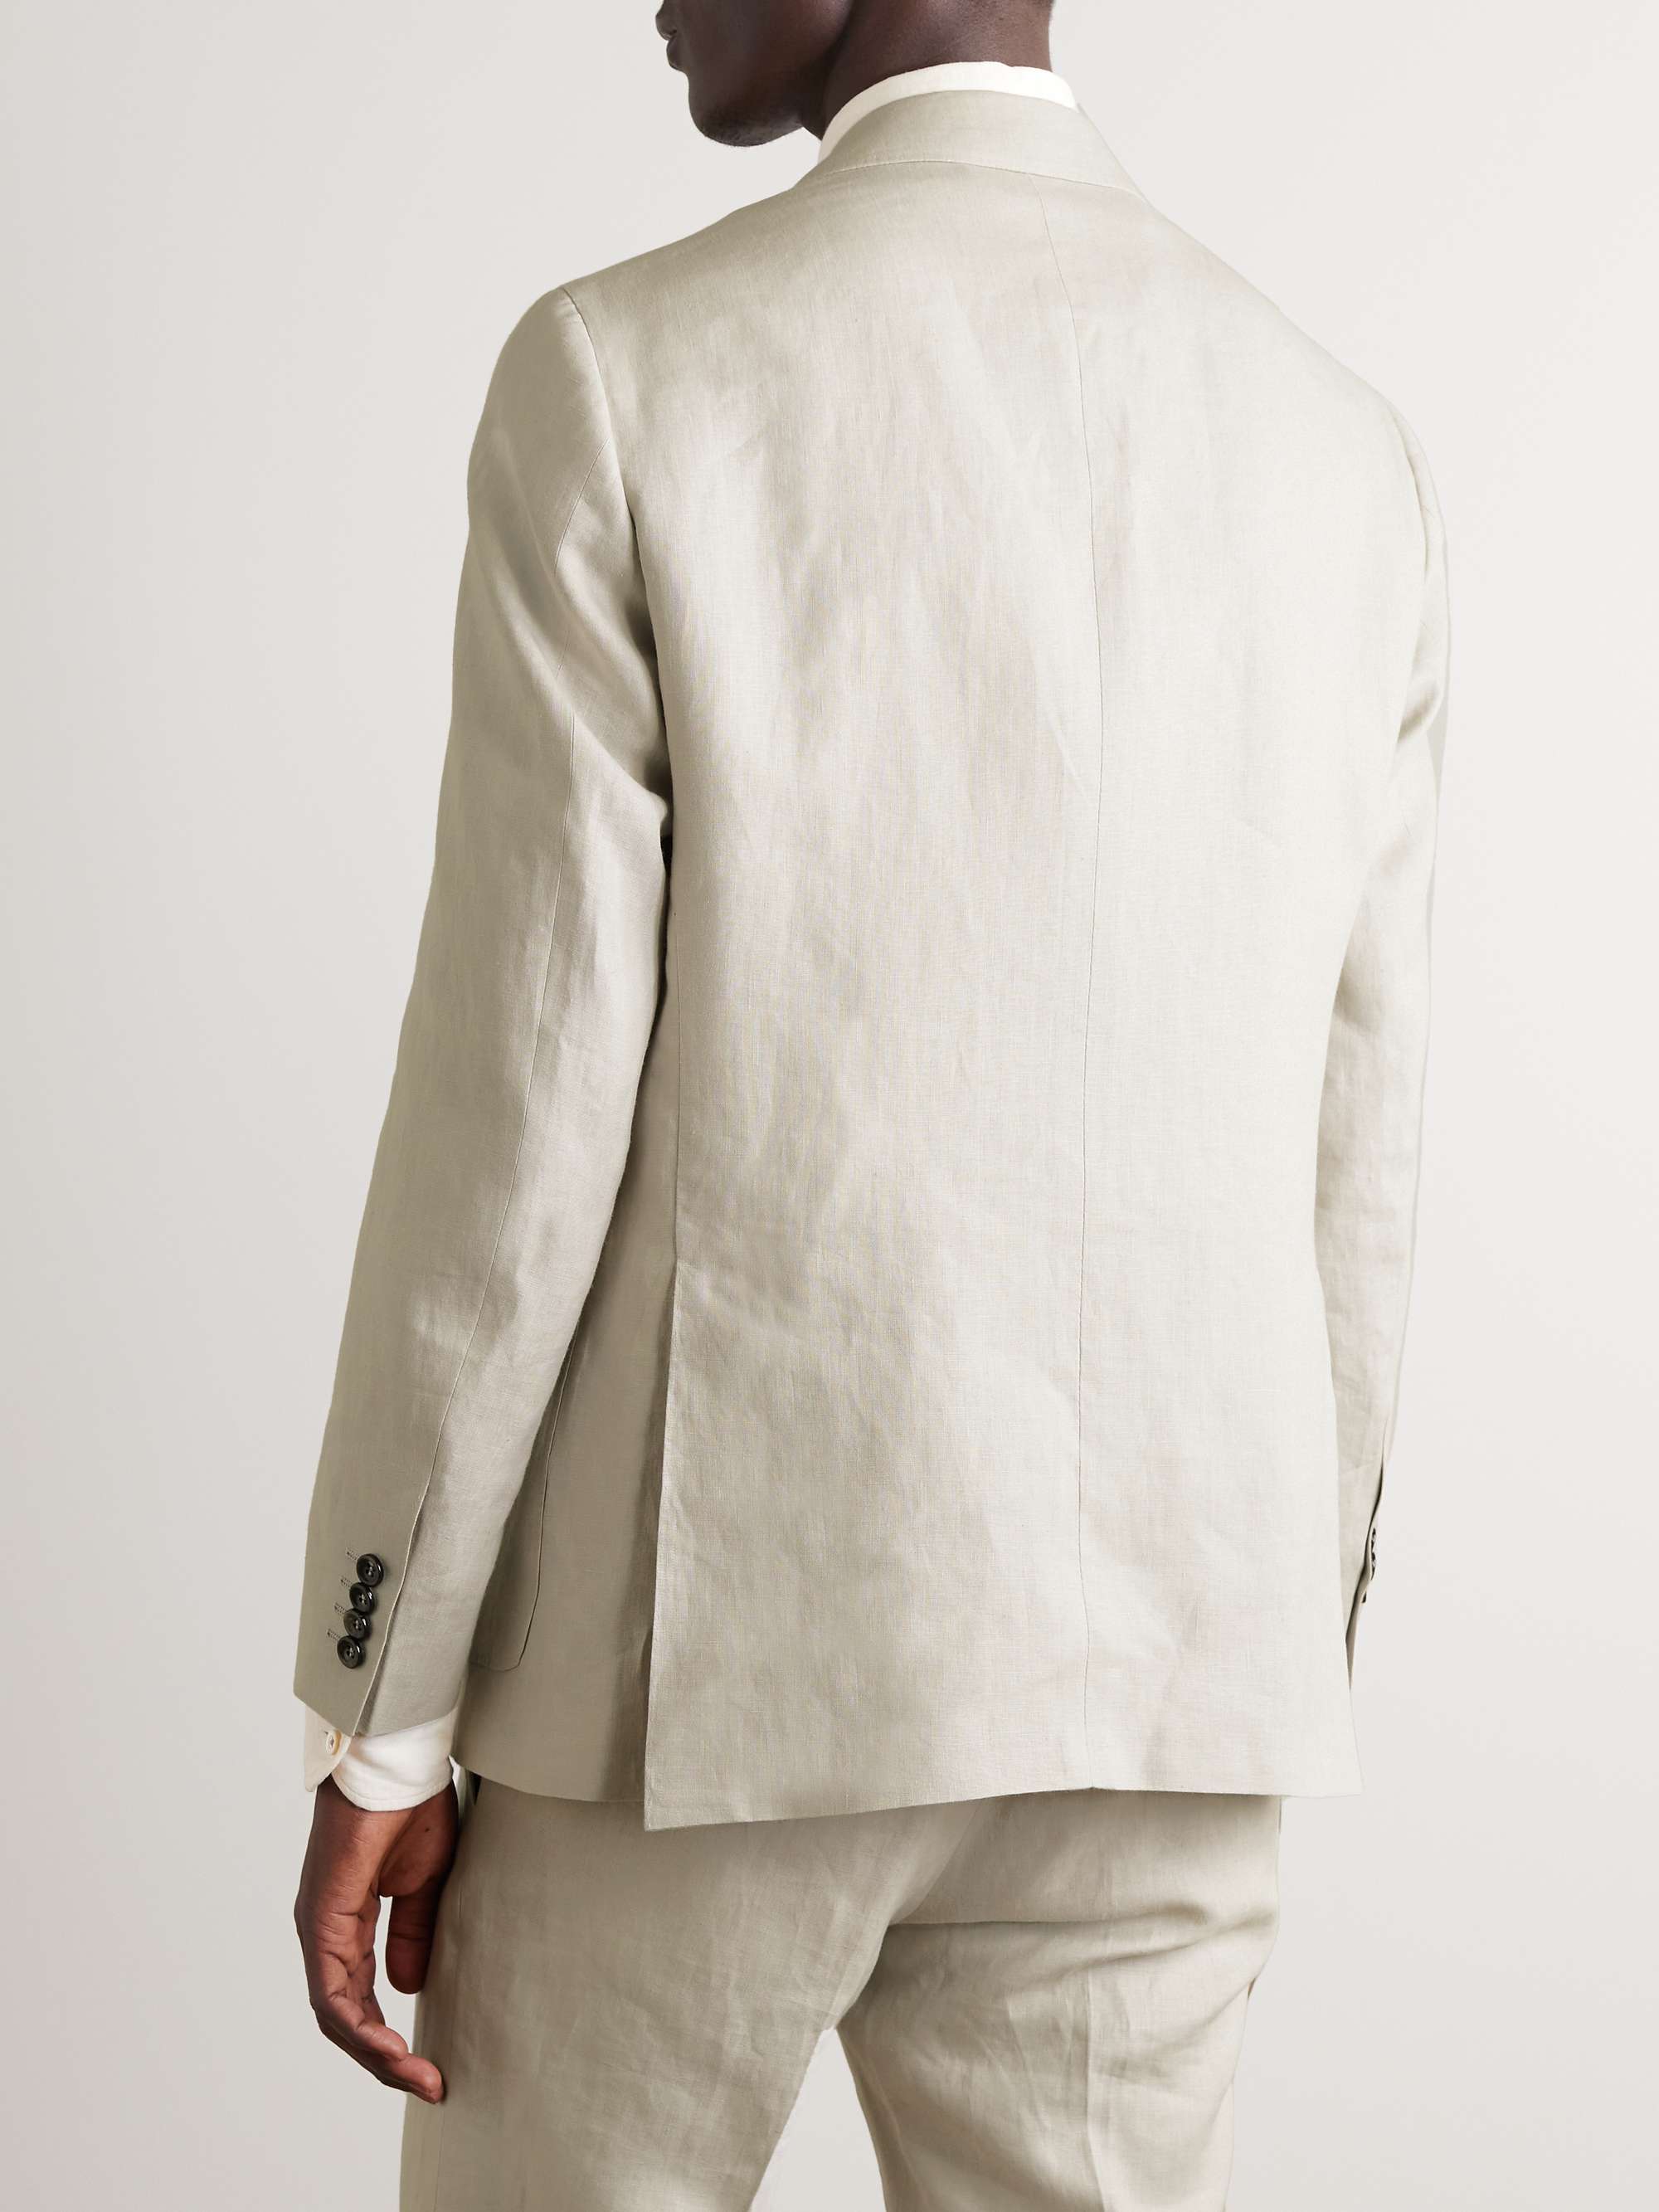 CANALI Linen Suit Jacket for Men | MR PORTER